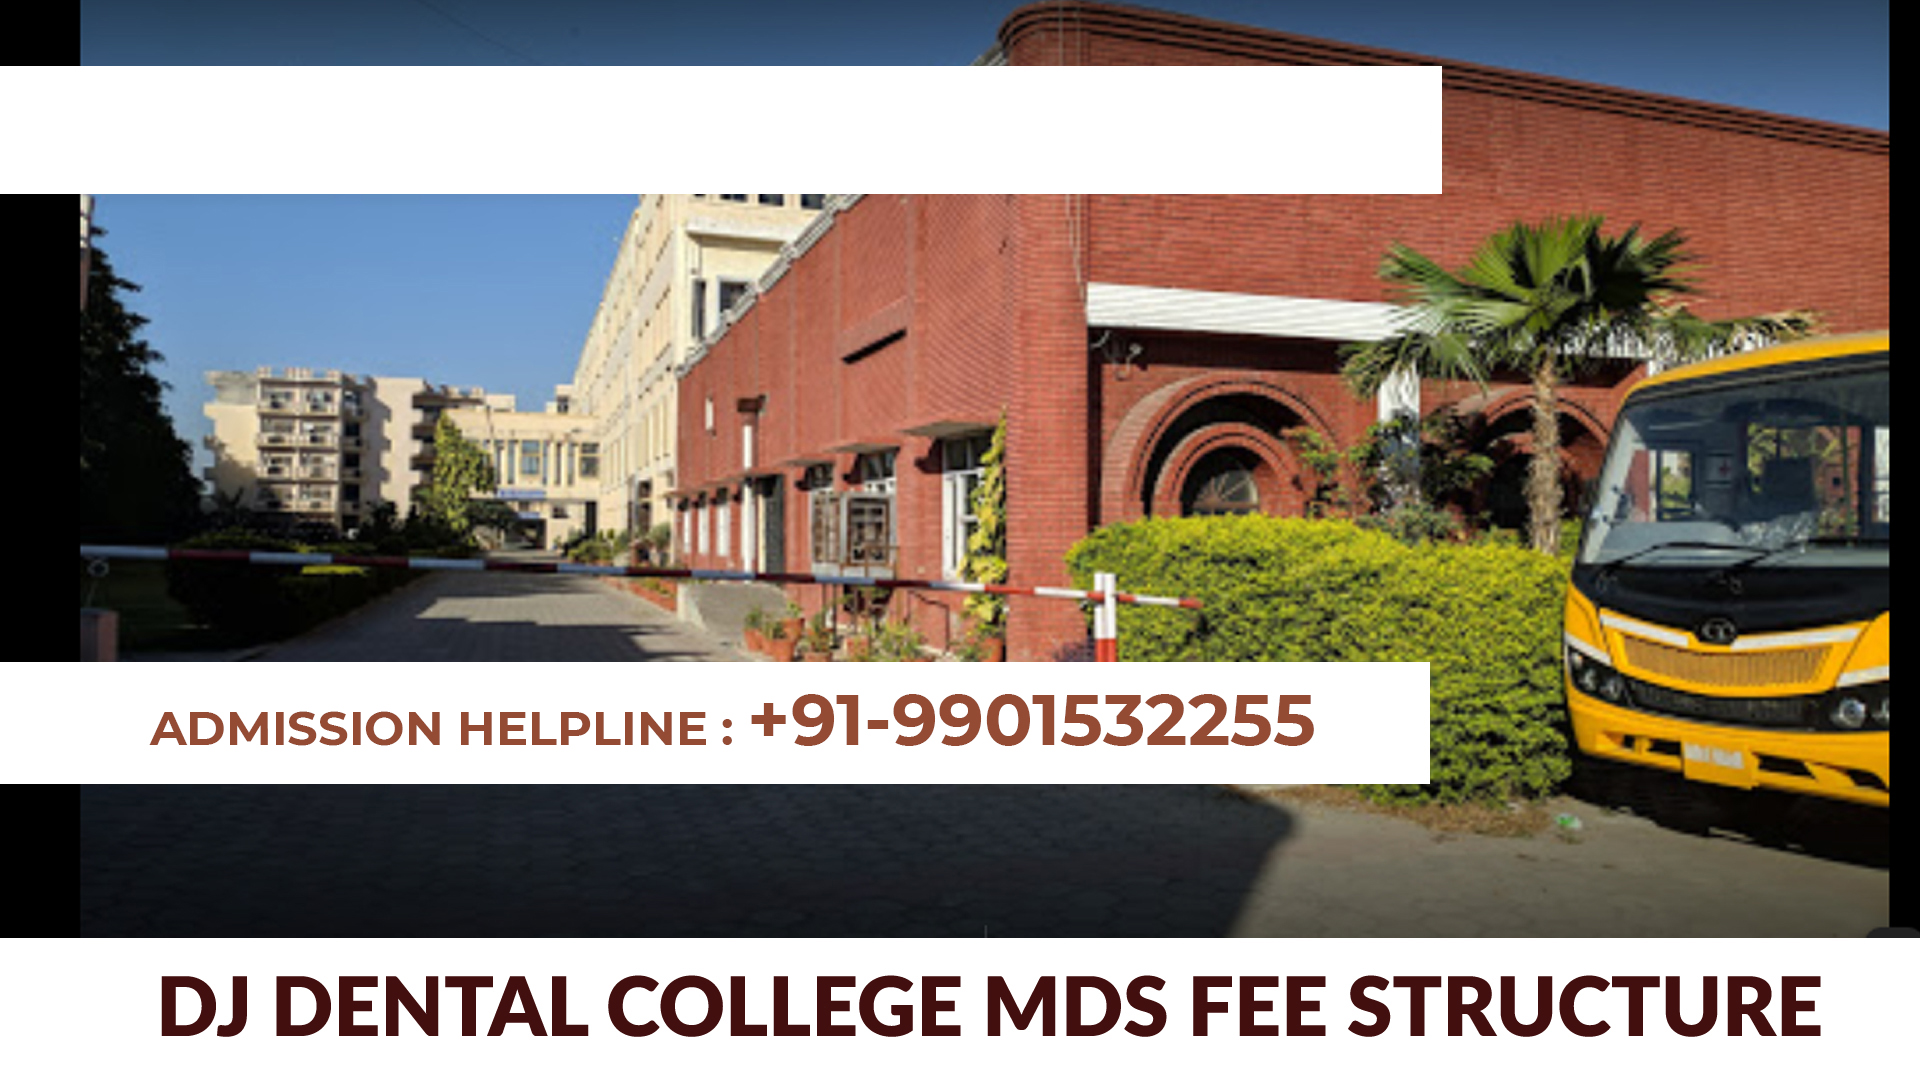 DJ Dental College MDS Fee Structure